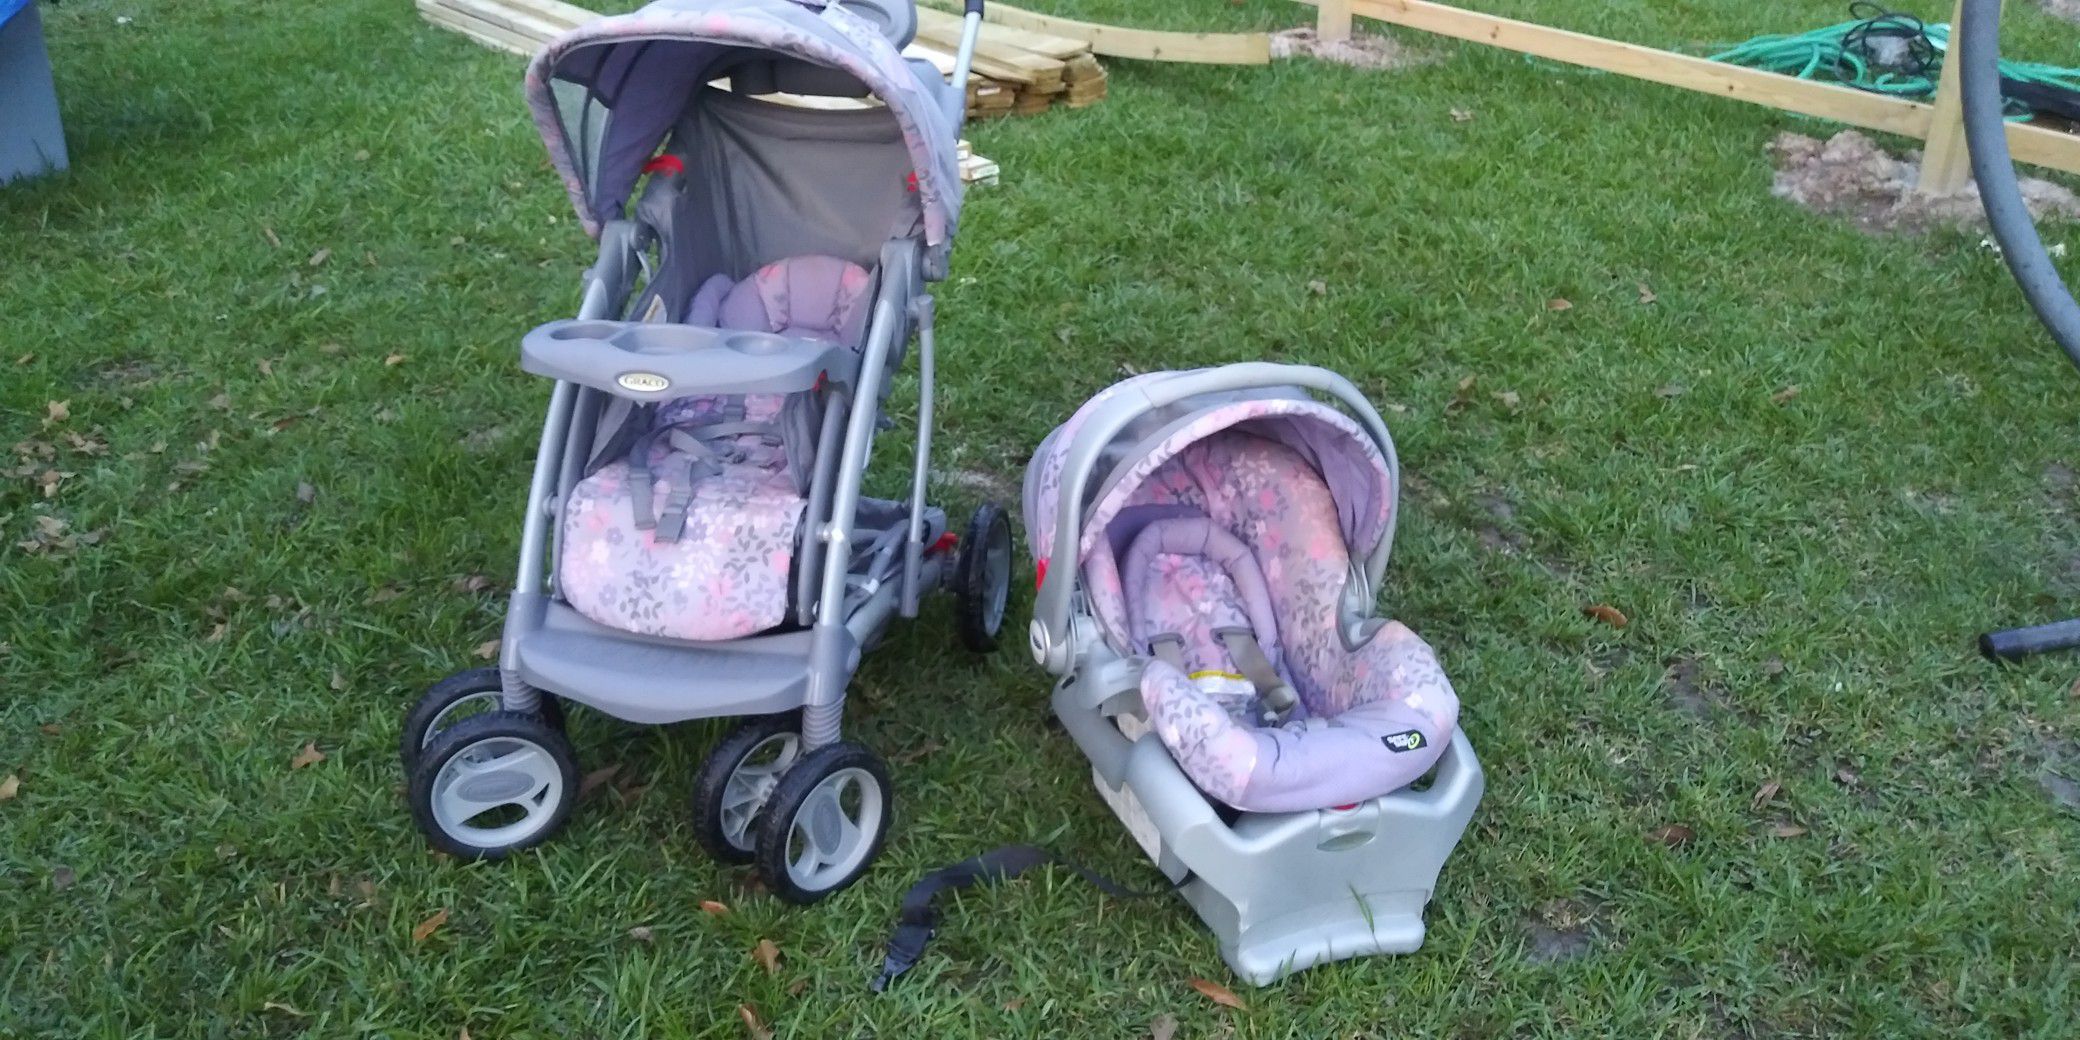 Graco infant seat & stroller